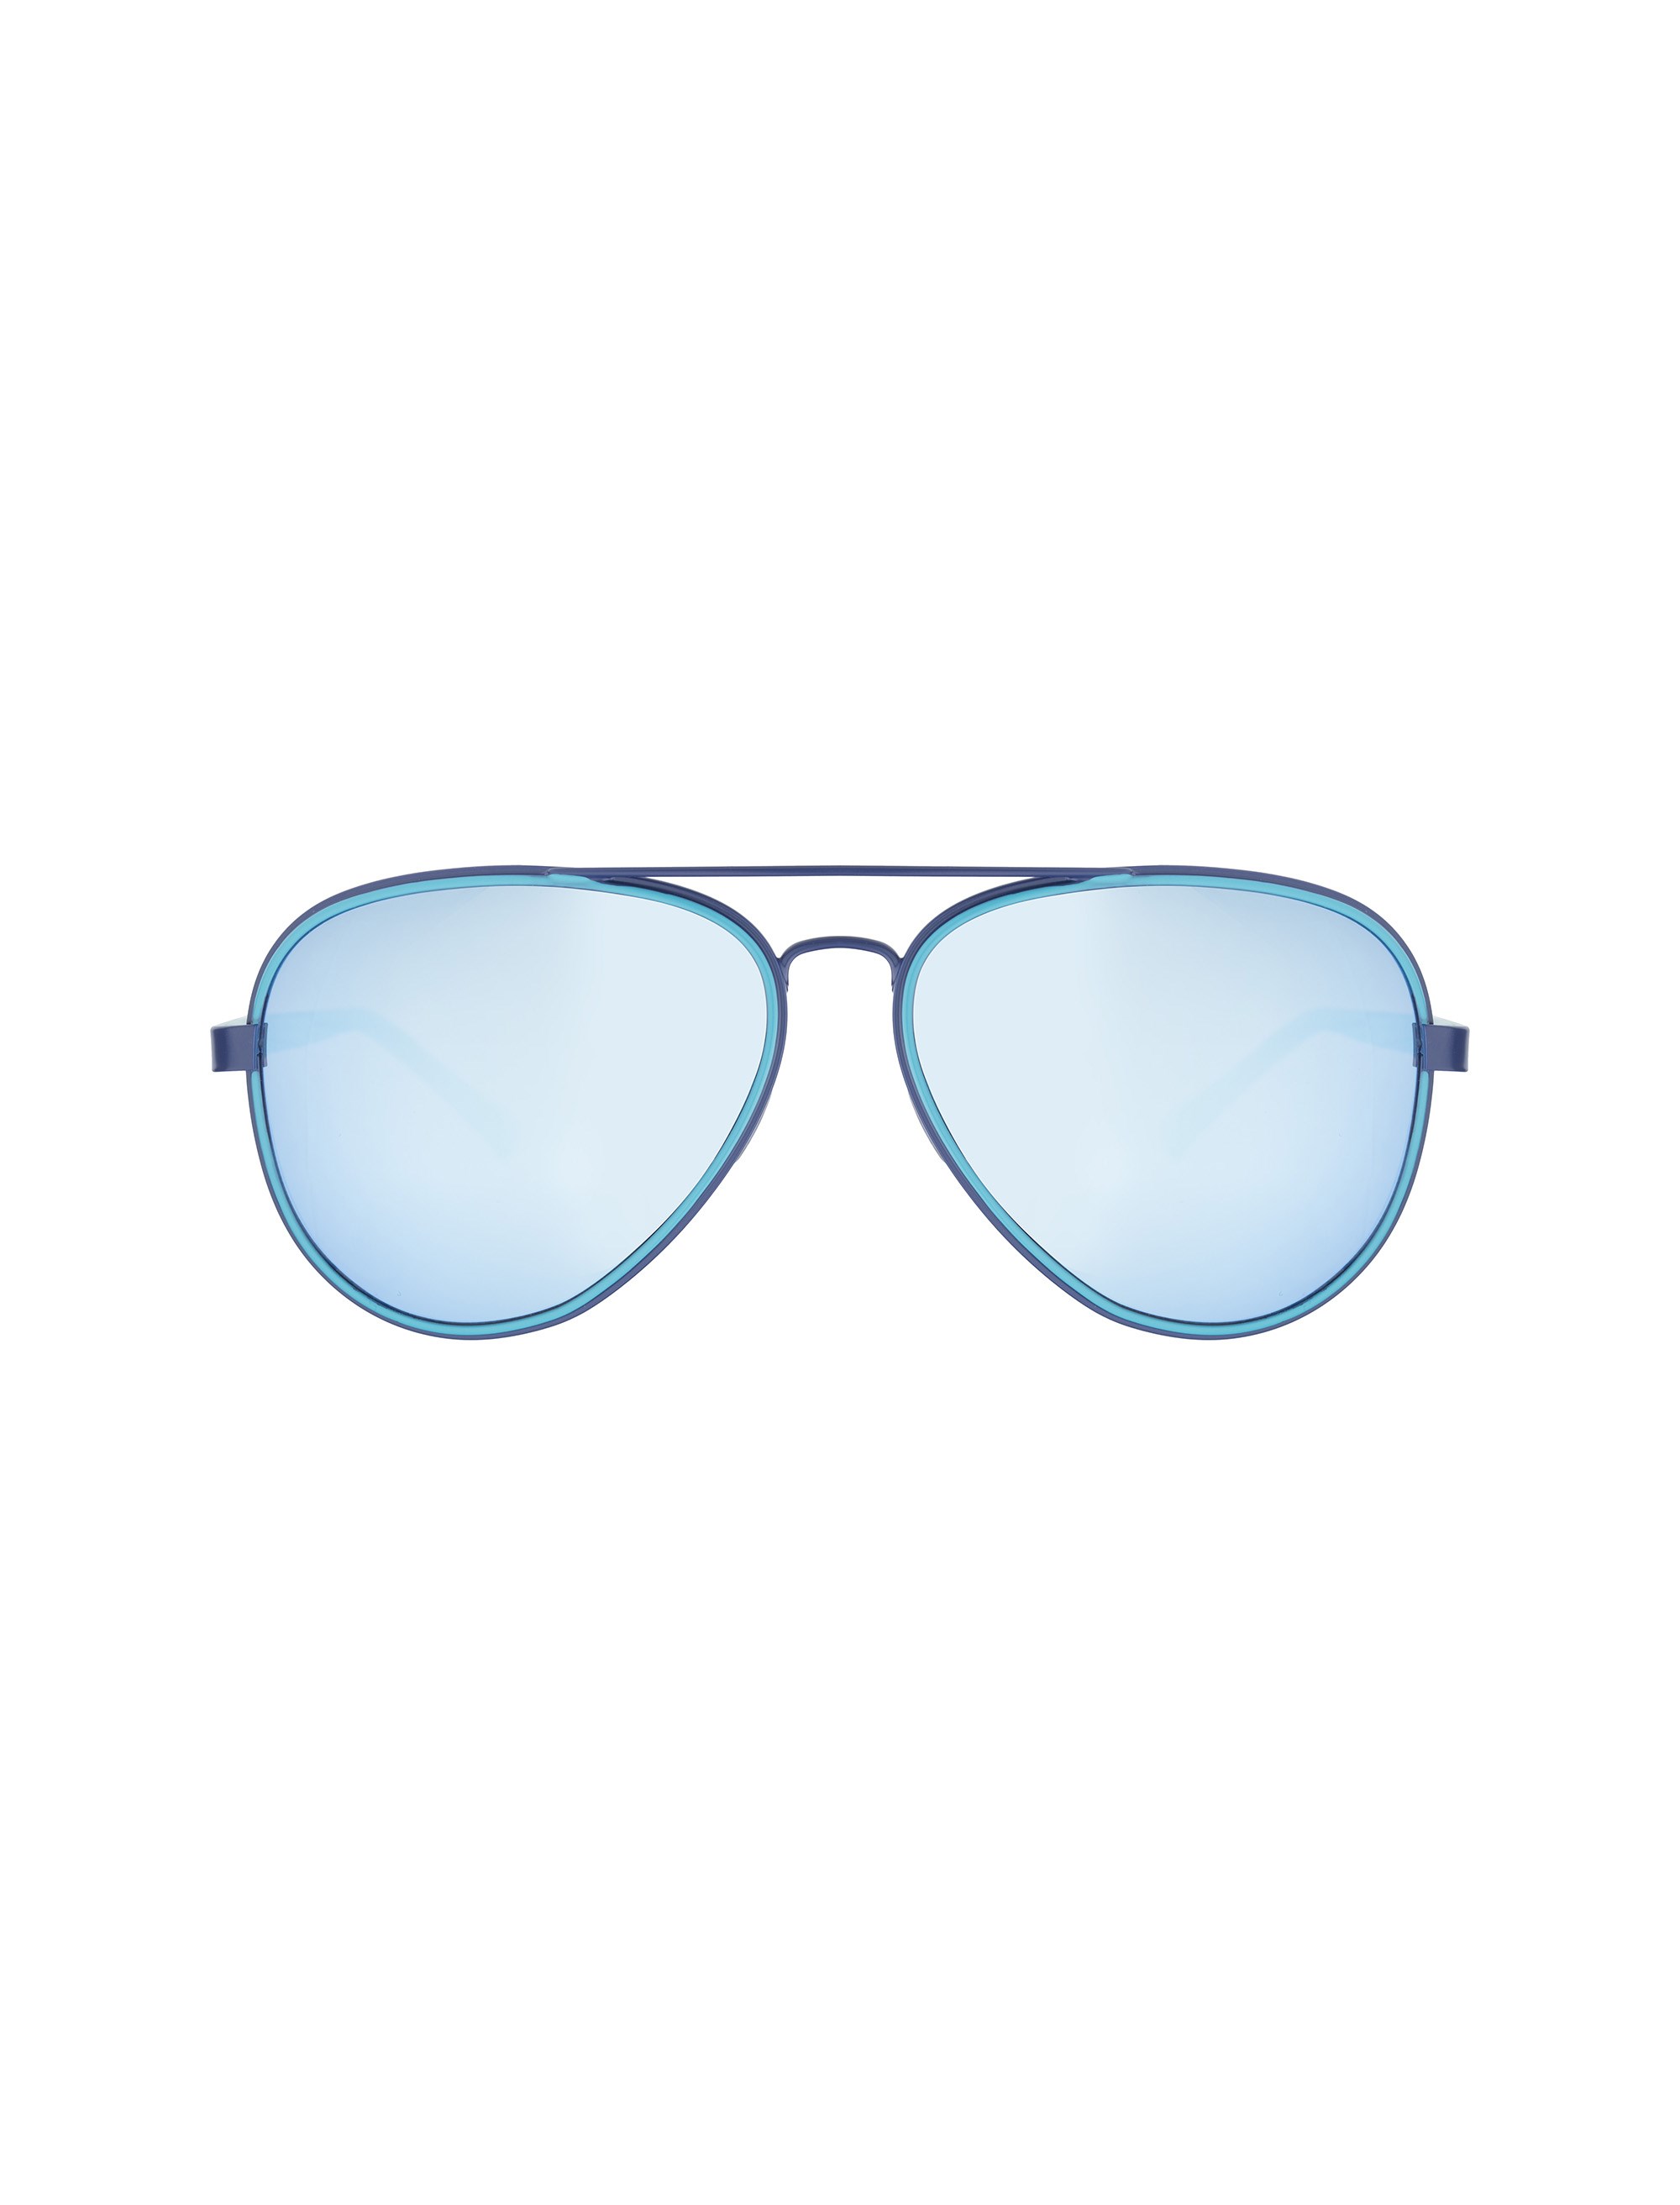 عینک آفتابی خلبانی زنانه - پپه جینز - آبي روشن - 2